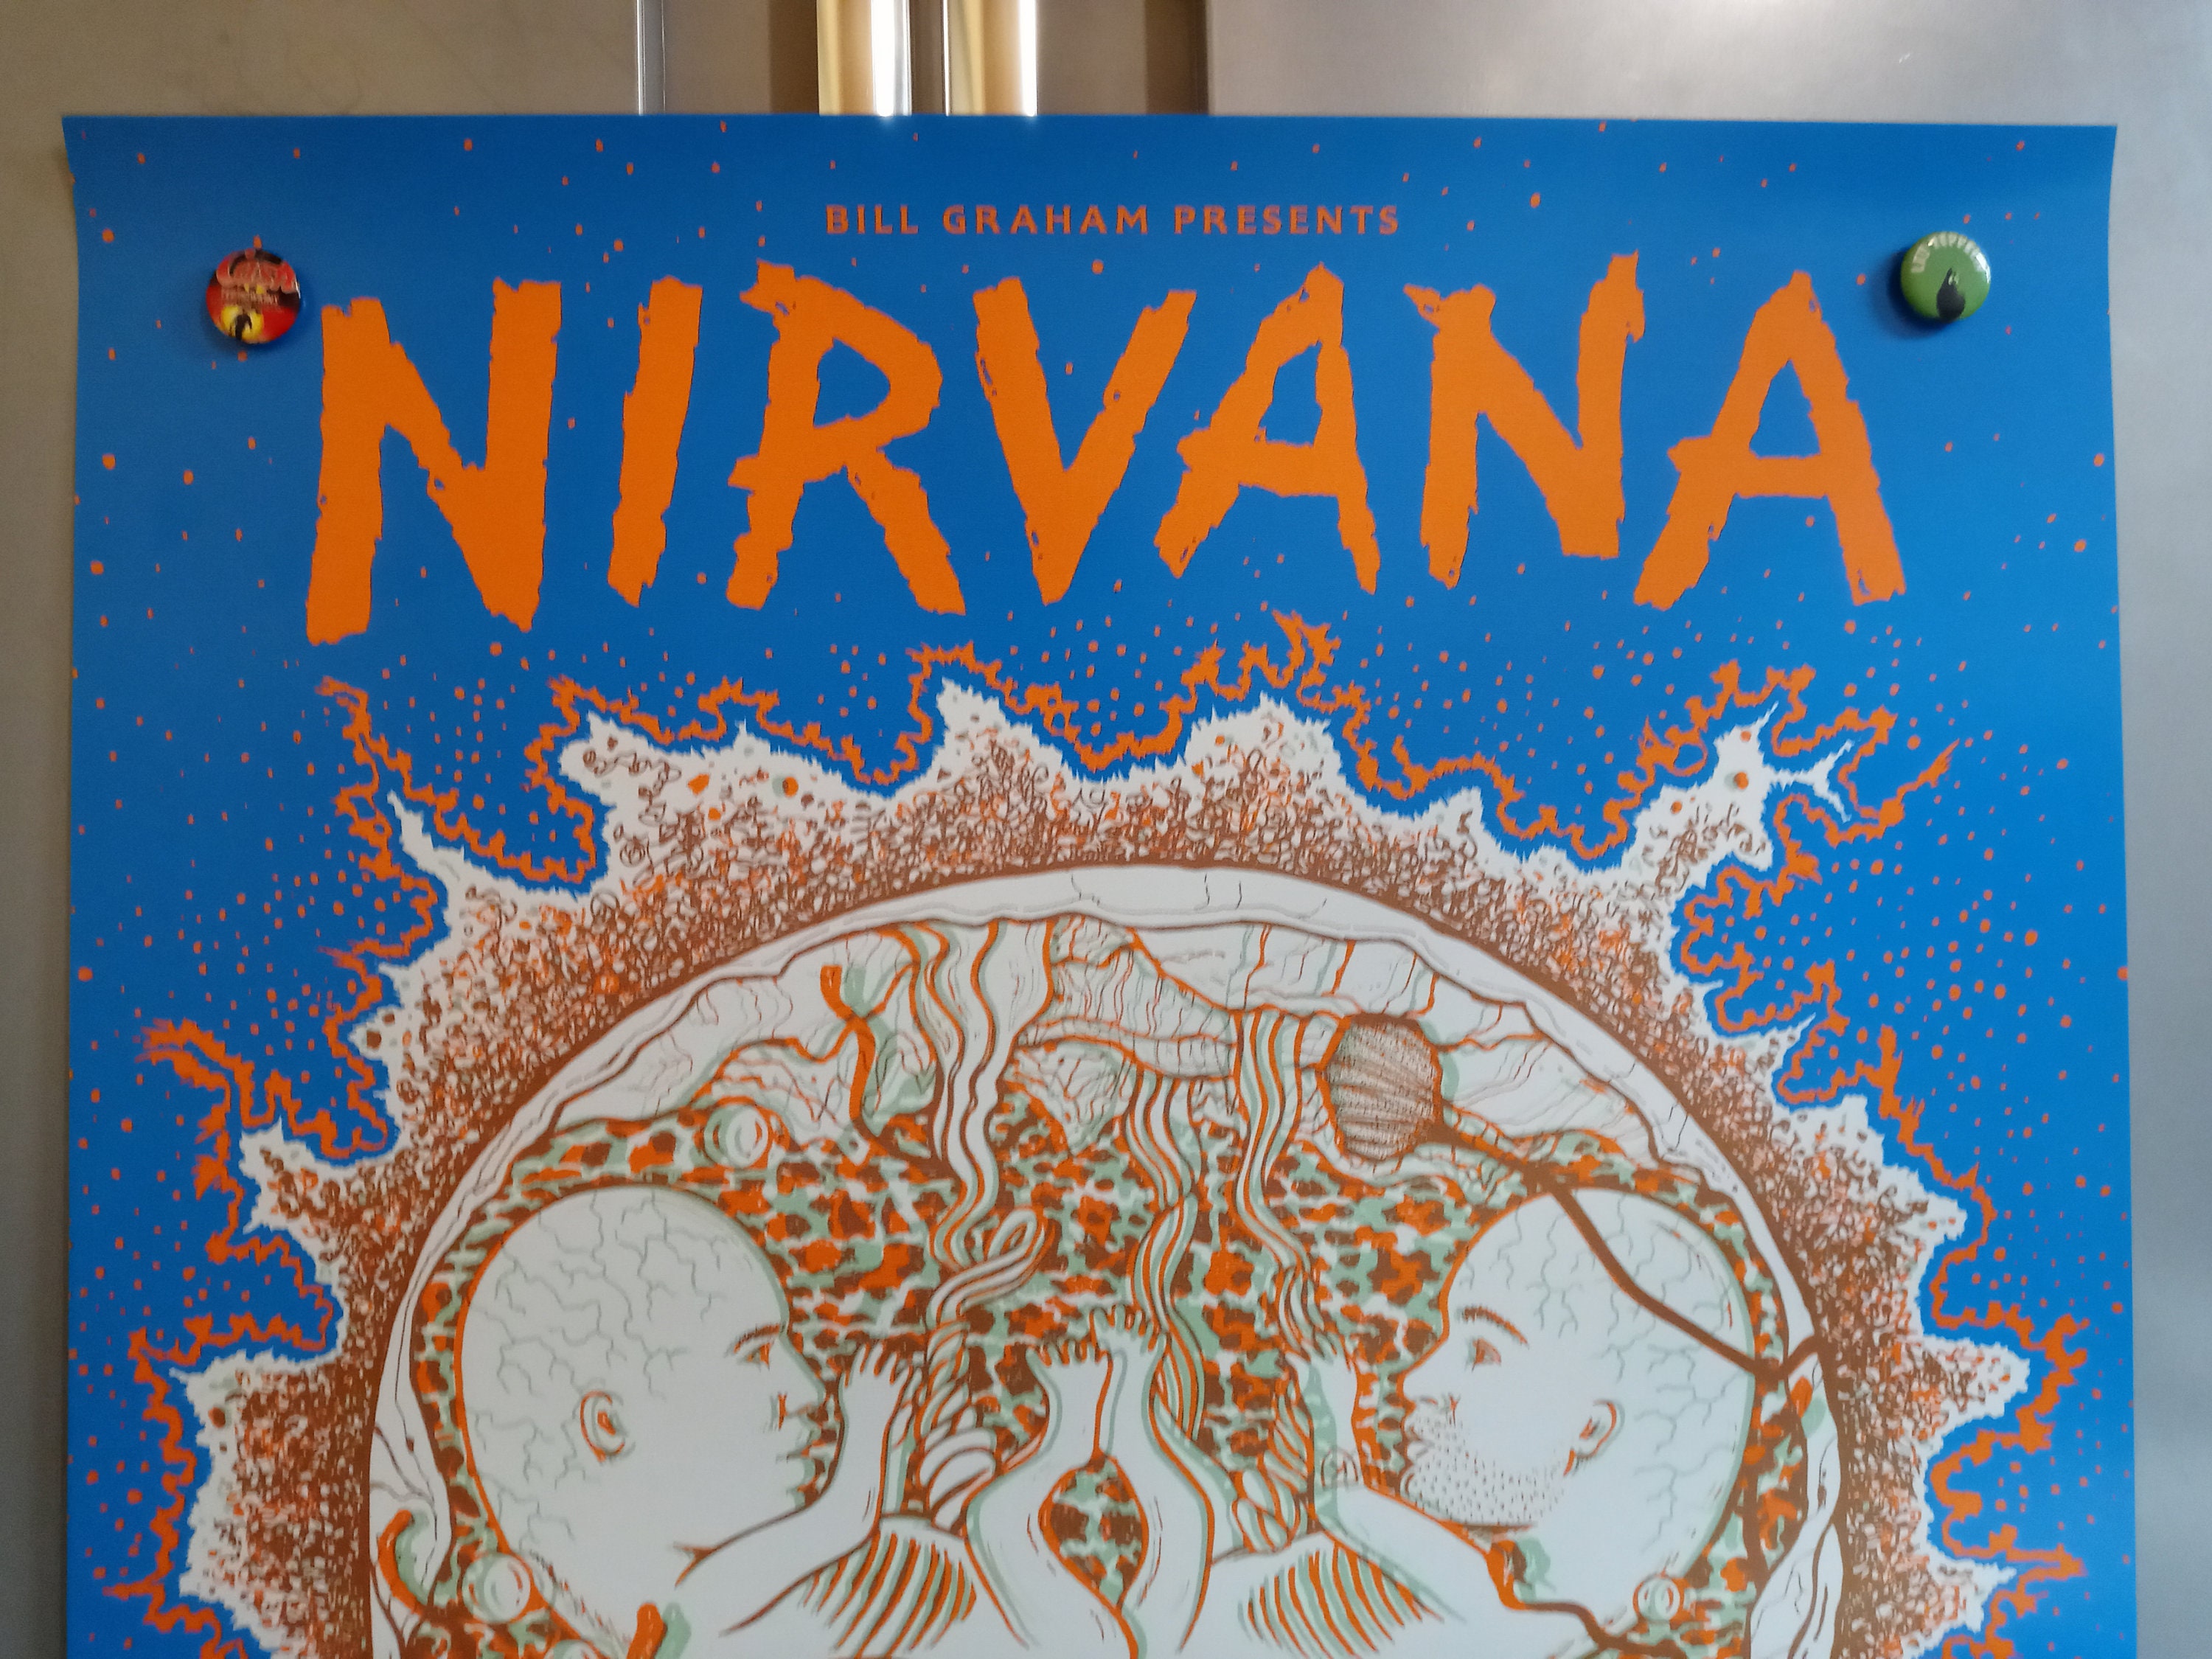 Nirvana Vintage Concert Poster from Oakland Coliseum Arena, Dec 31, 1993 at  Wolfgang's